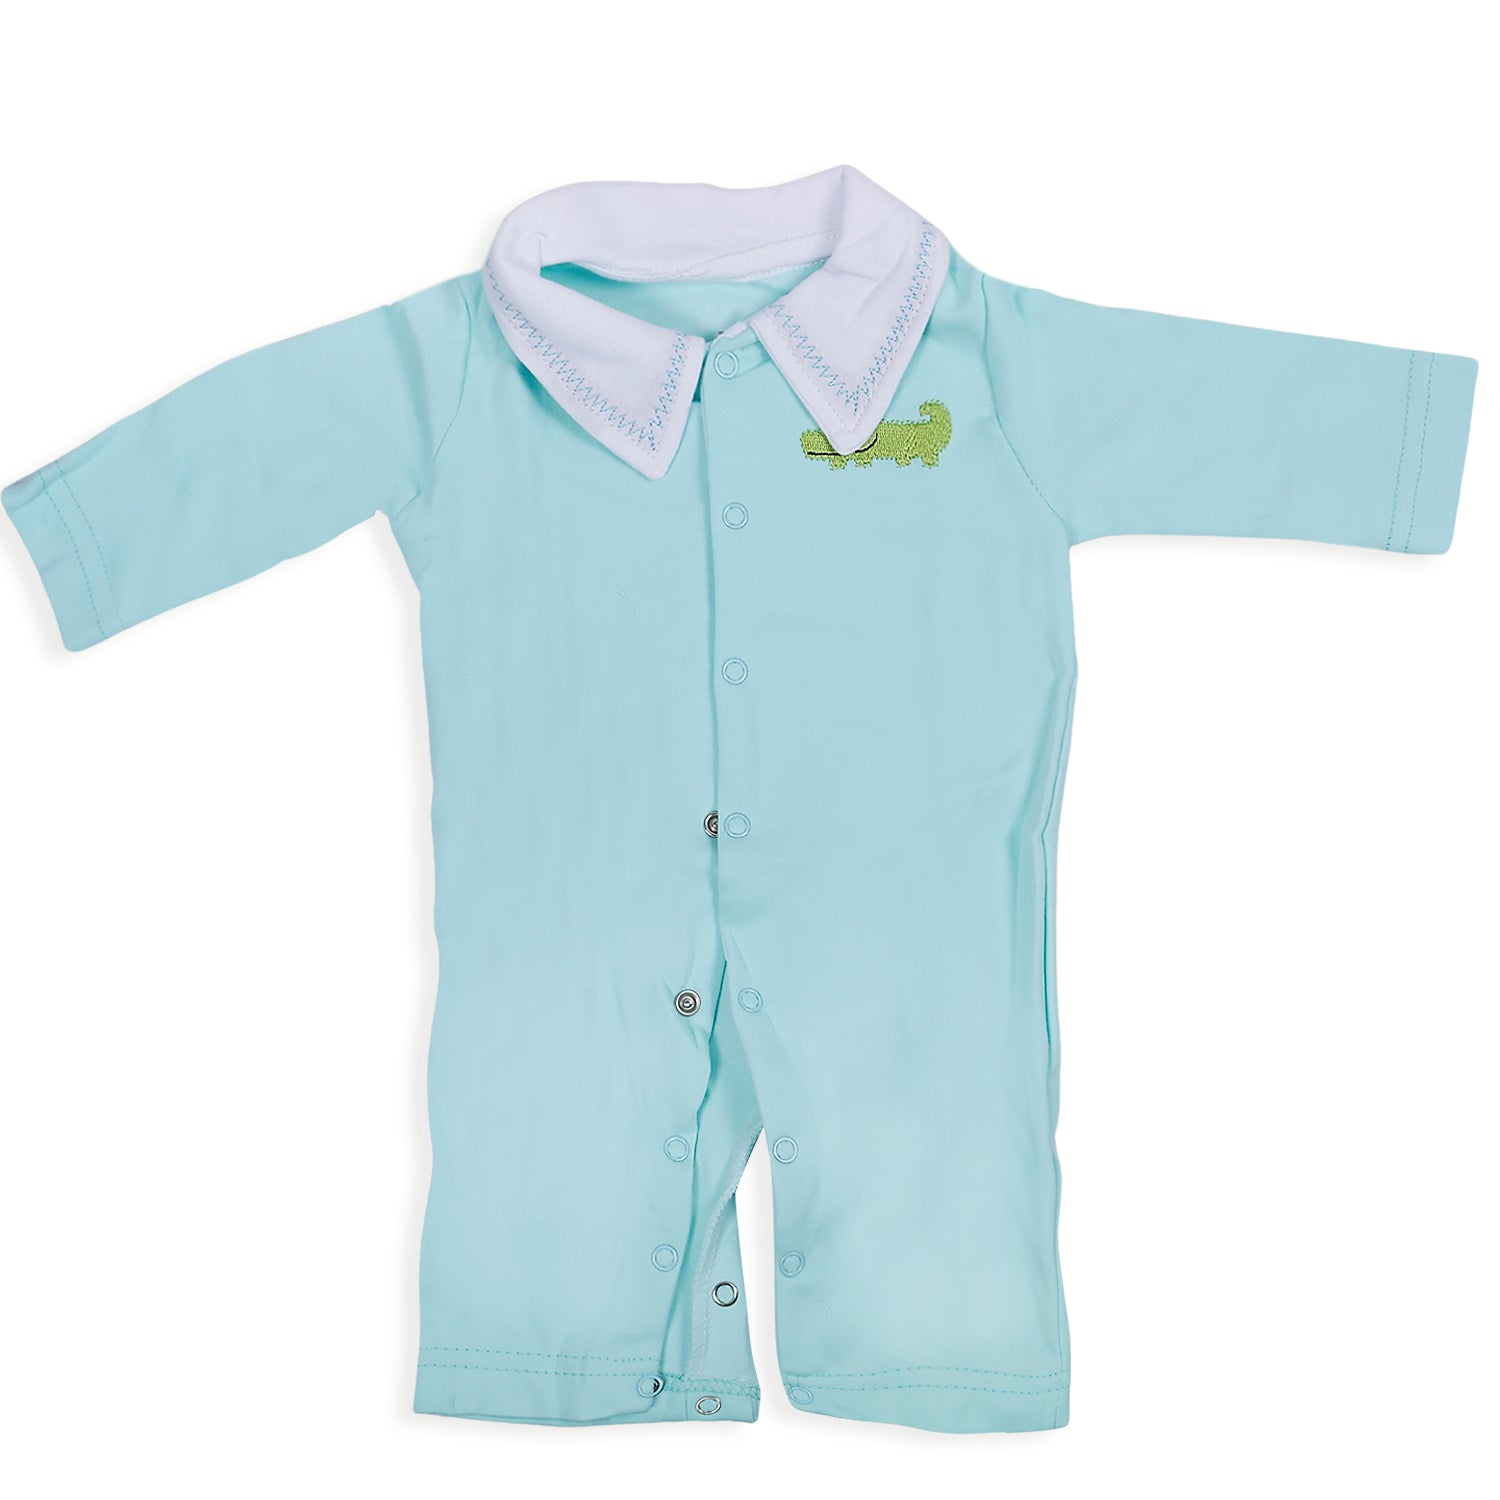 Crocodile Newborn Gift Set 4 Pcs - Turquoise - Baby Moo